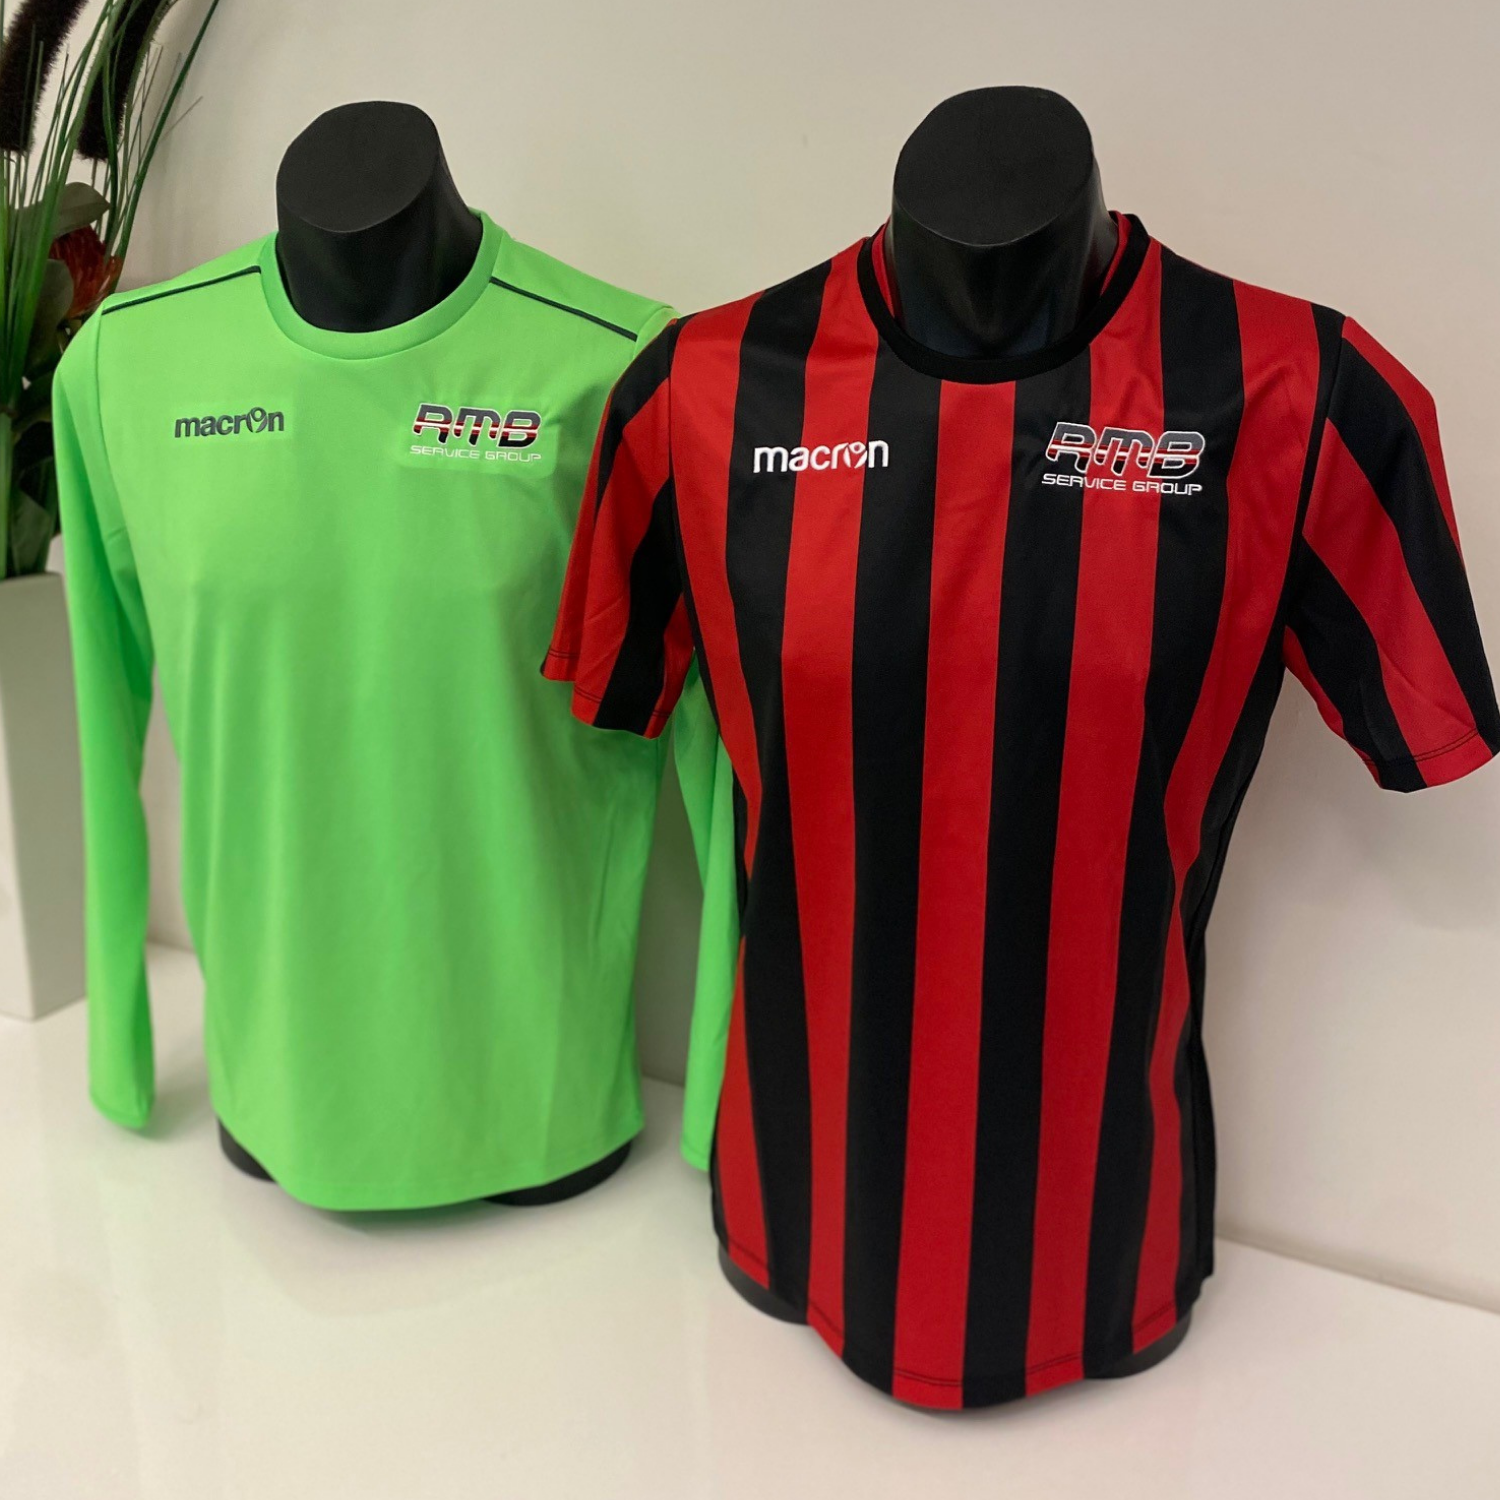 RMB Service Group Custom soccer jersey's